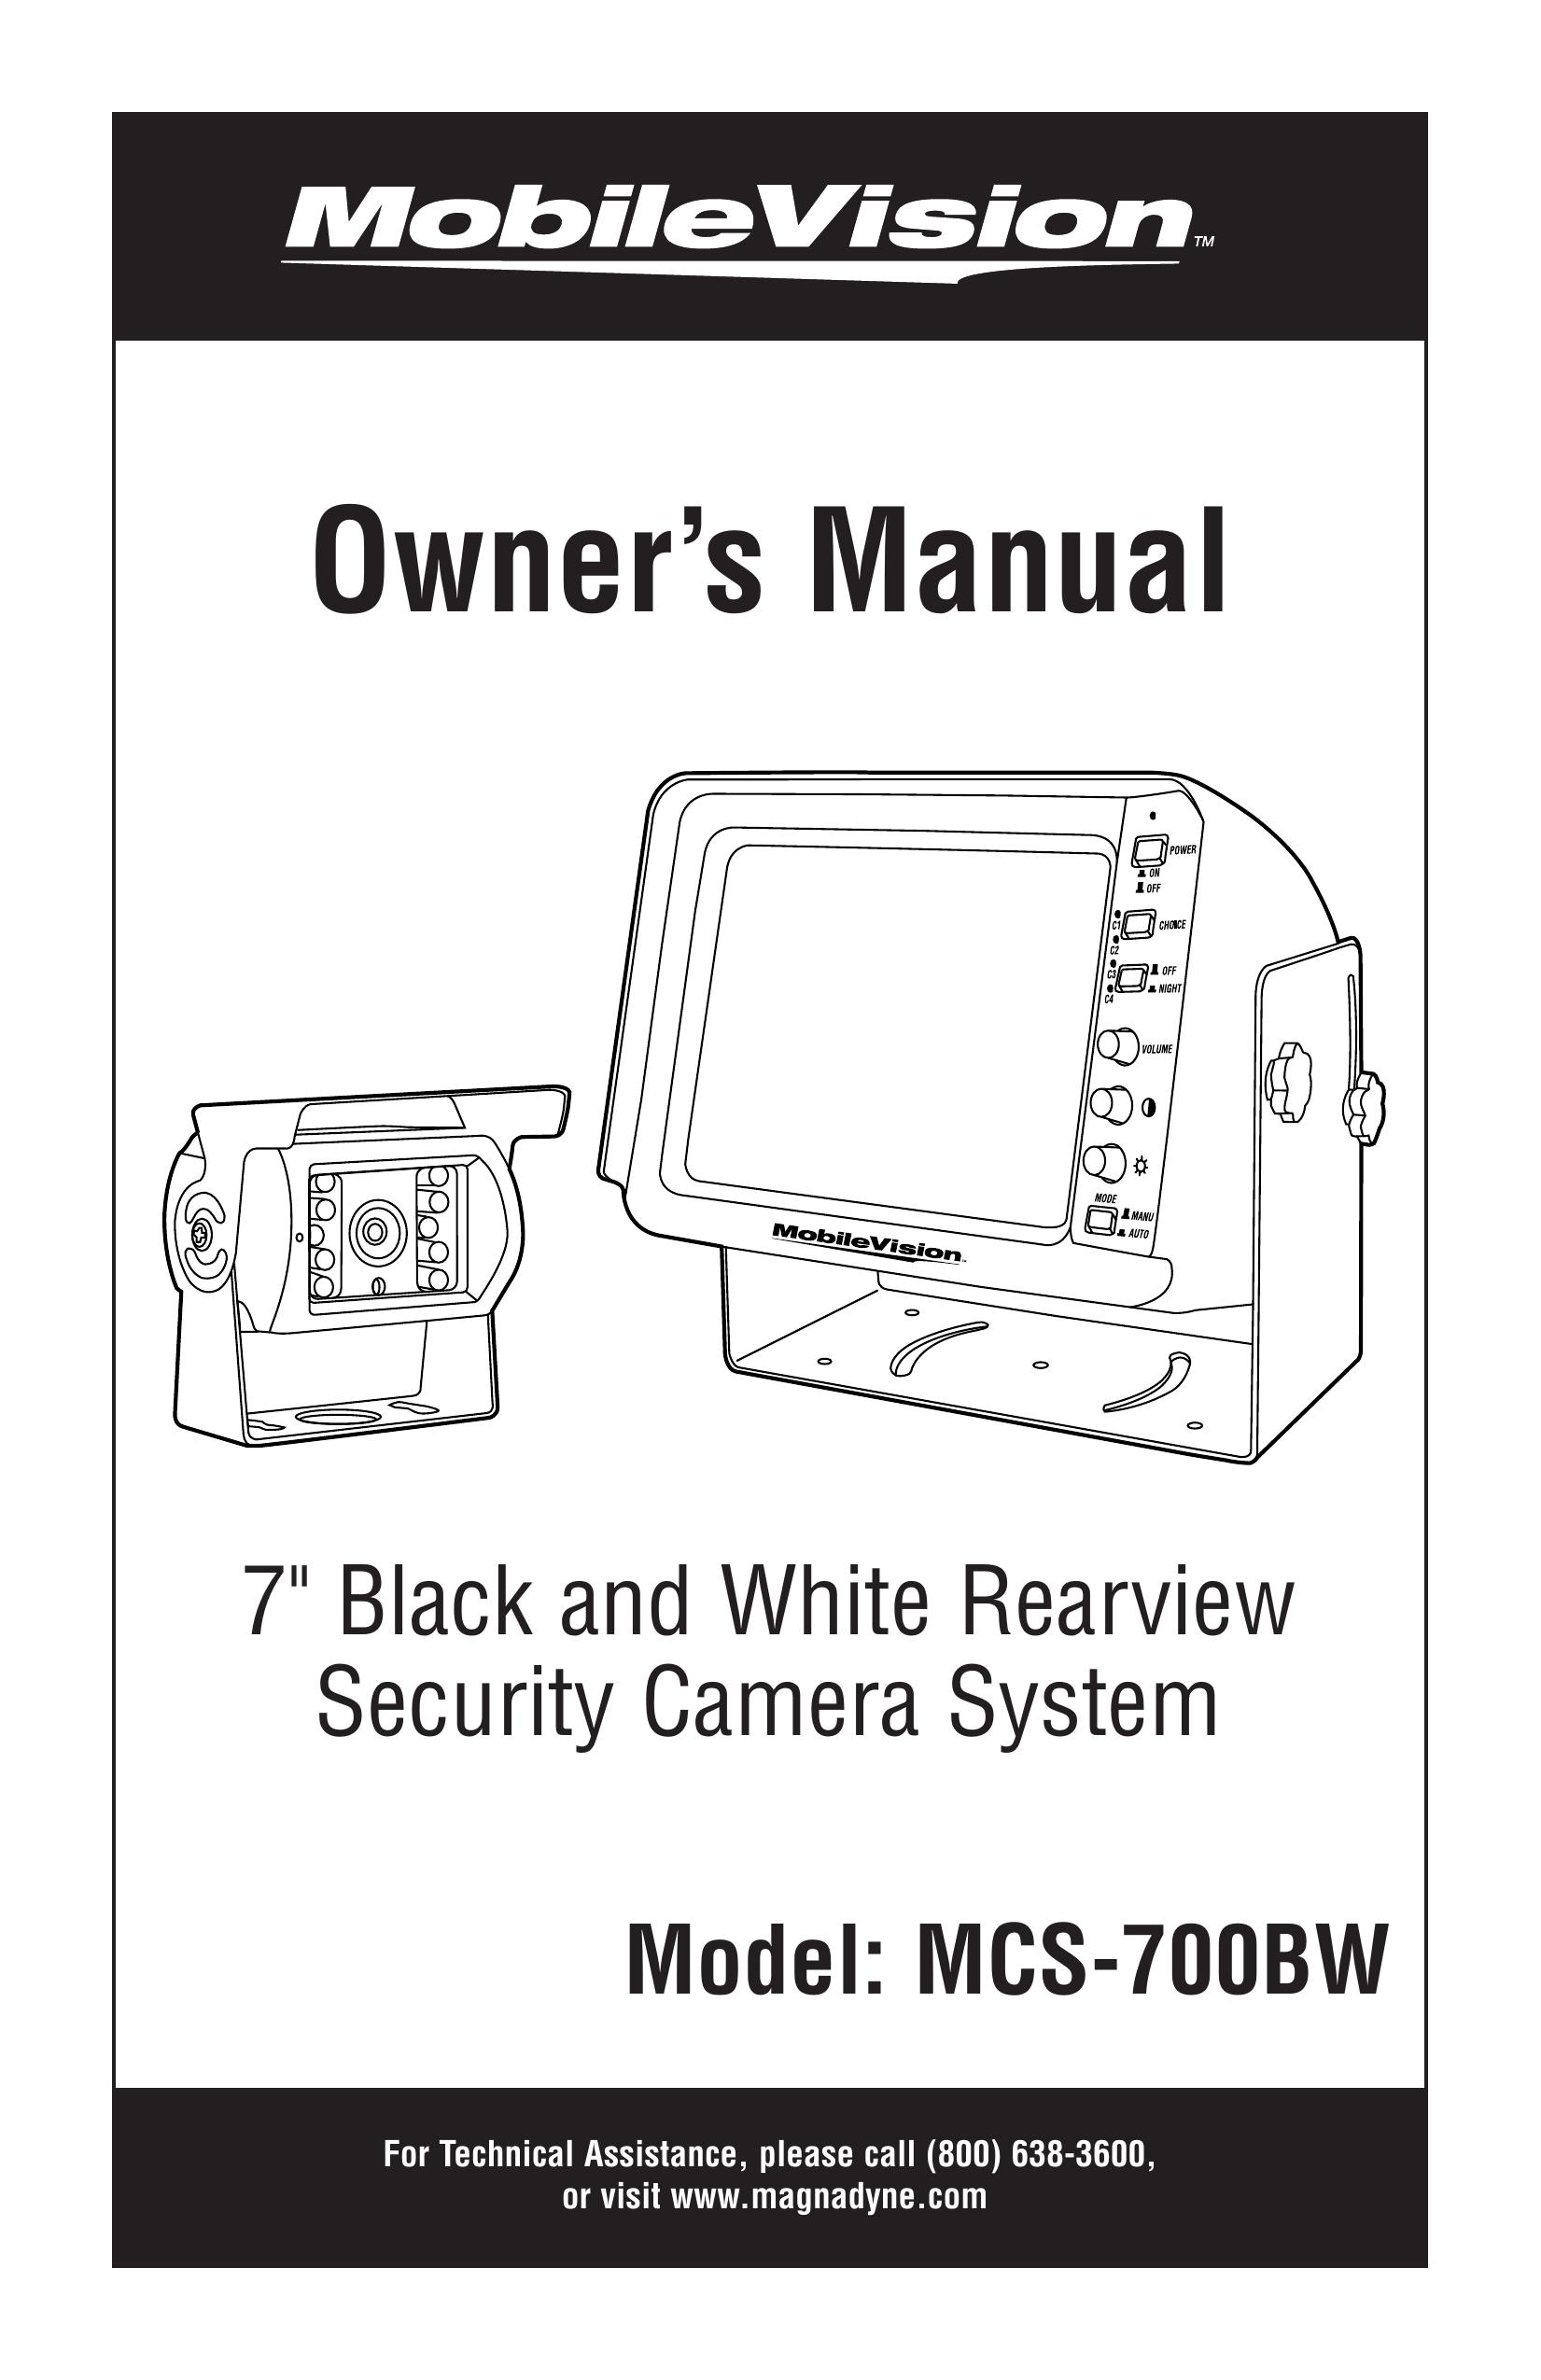 Magnadyne MCS-700BW Security Camera User Manual